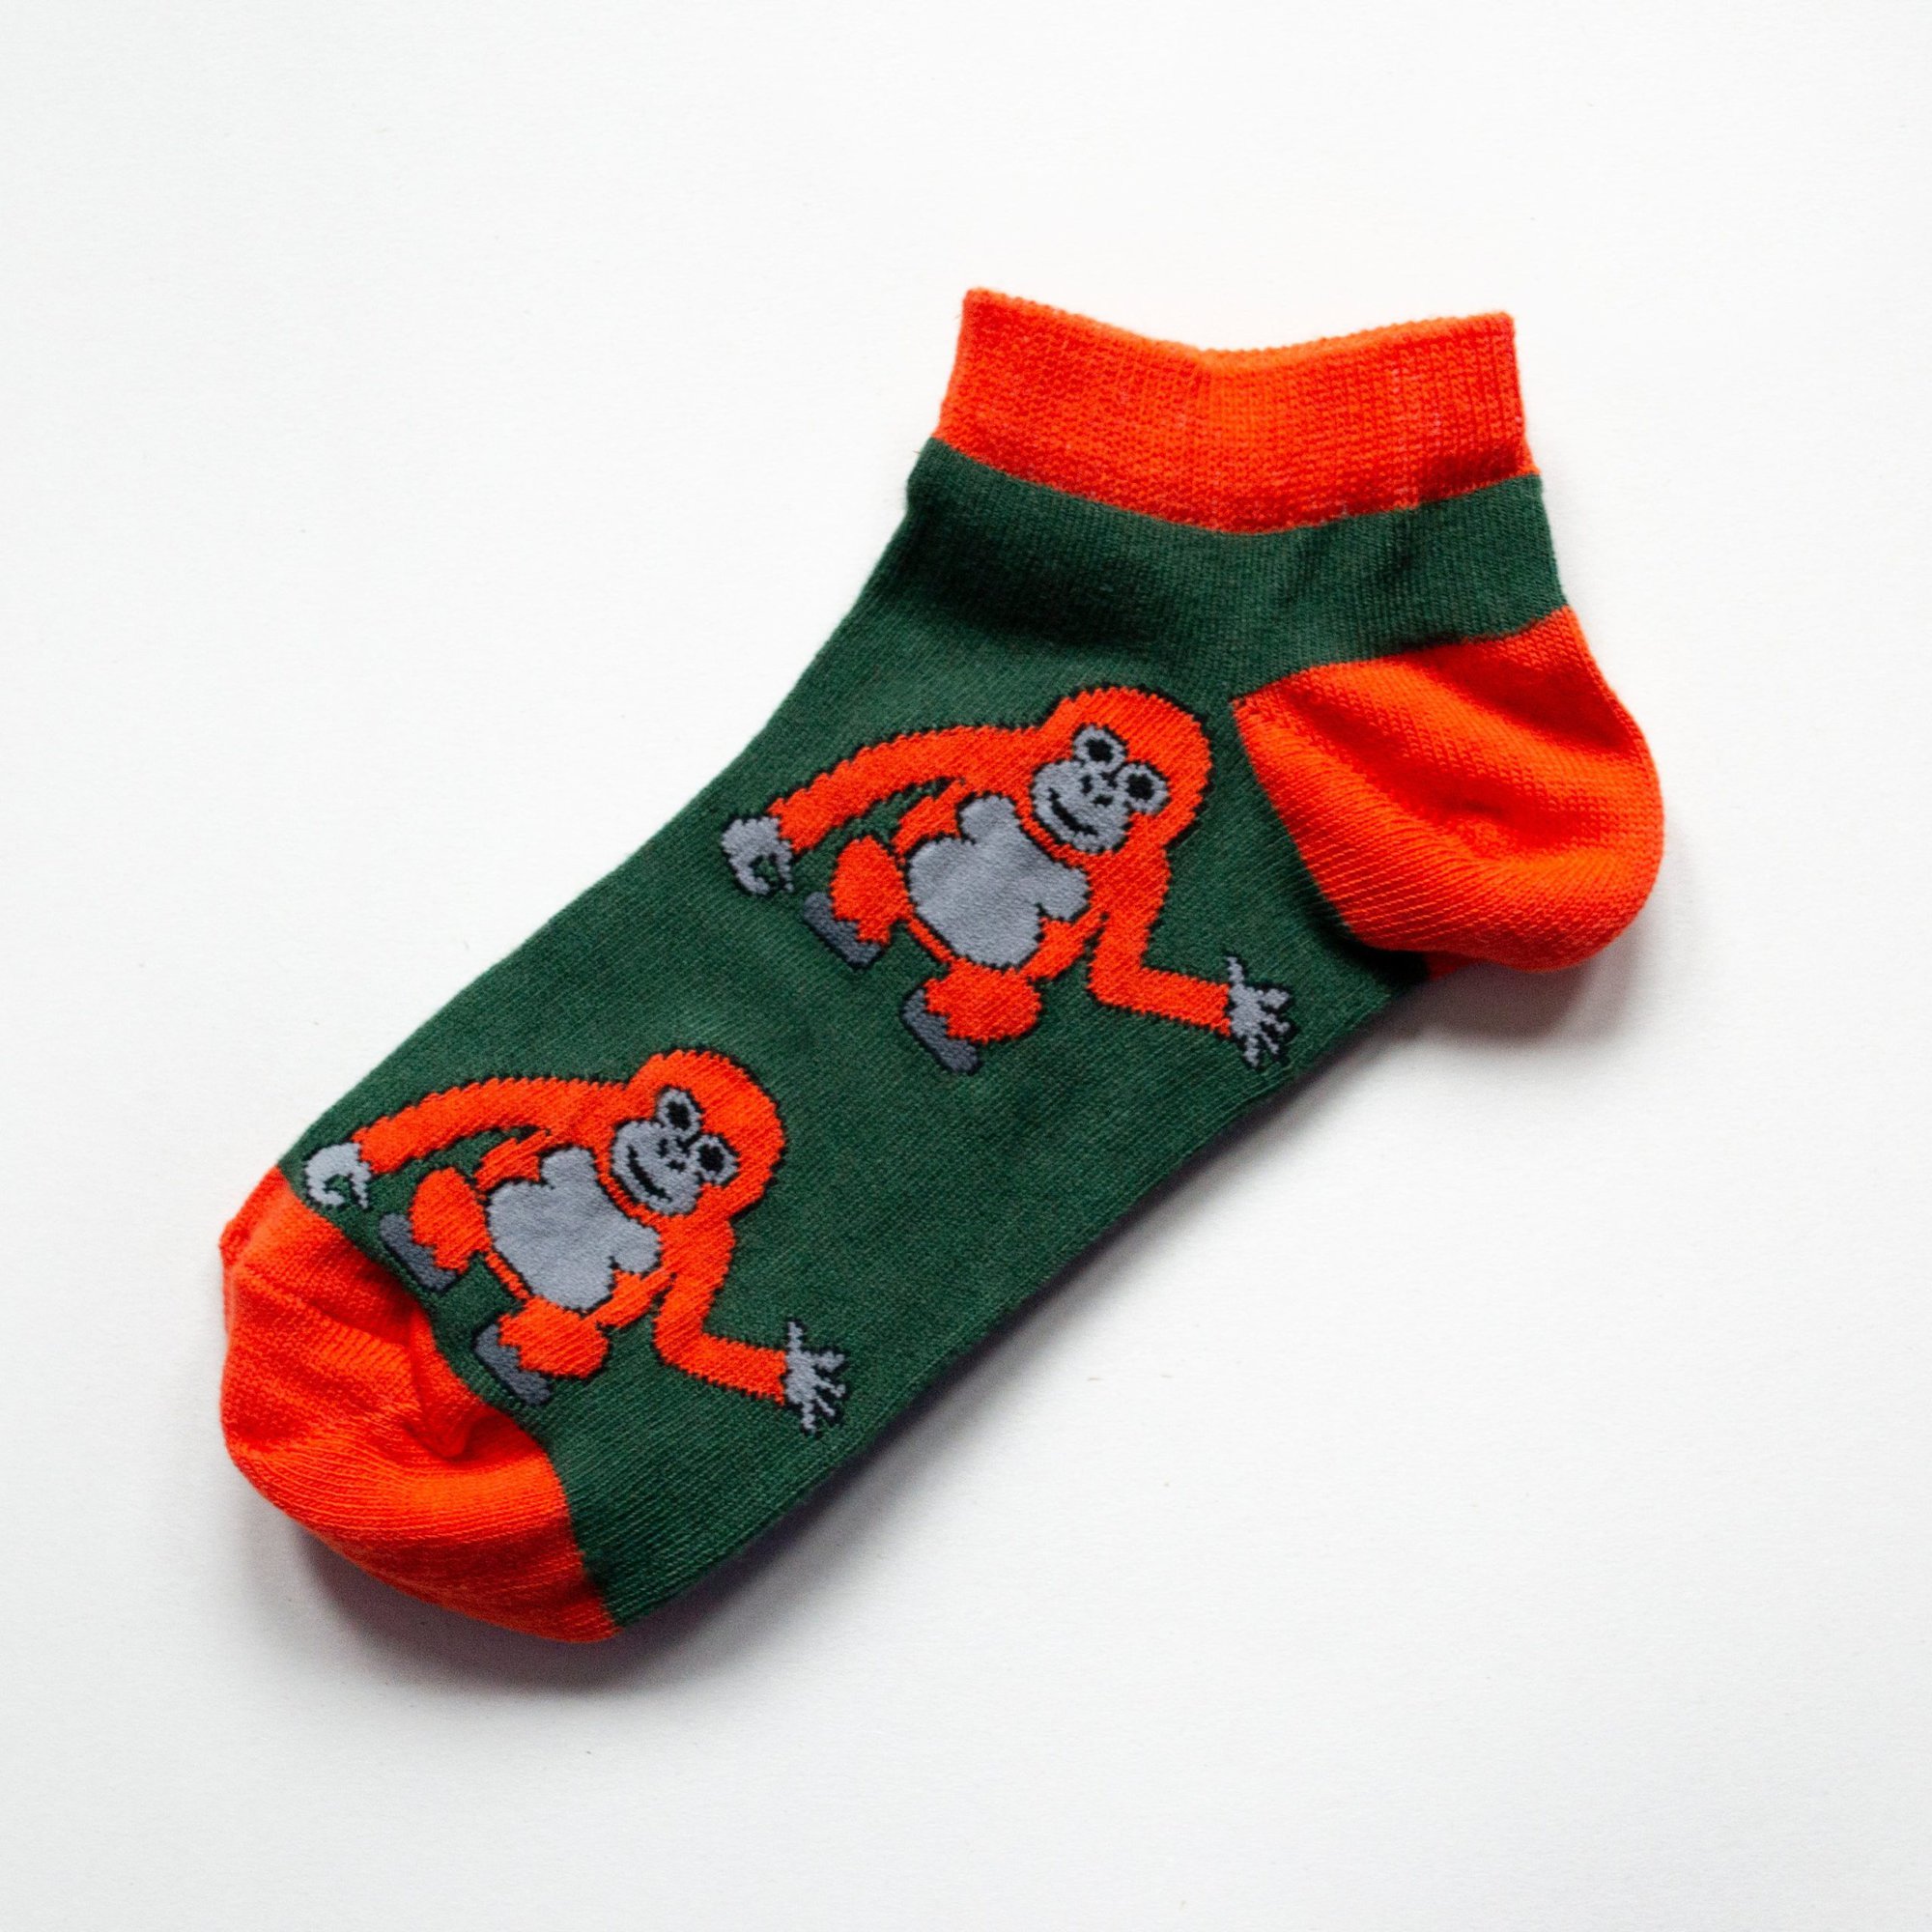 Orangutan Trainer Socks 2 Pairs